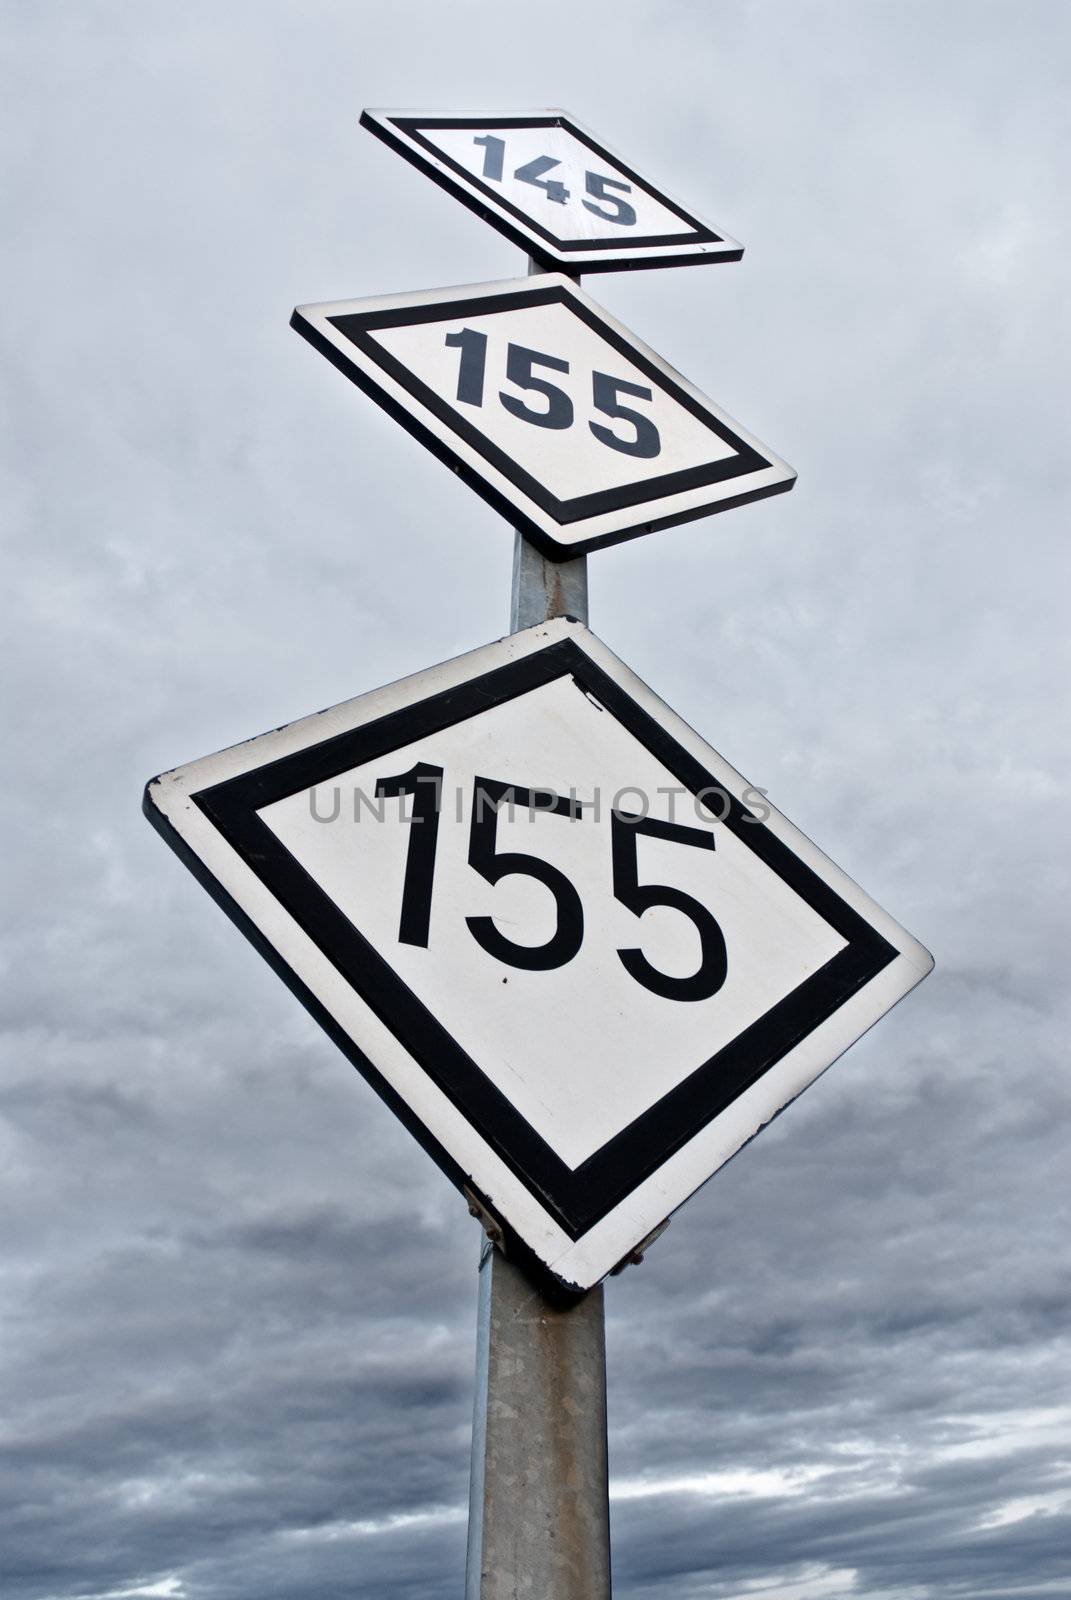 Railway speed limit symbol over sky background